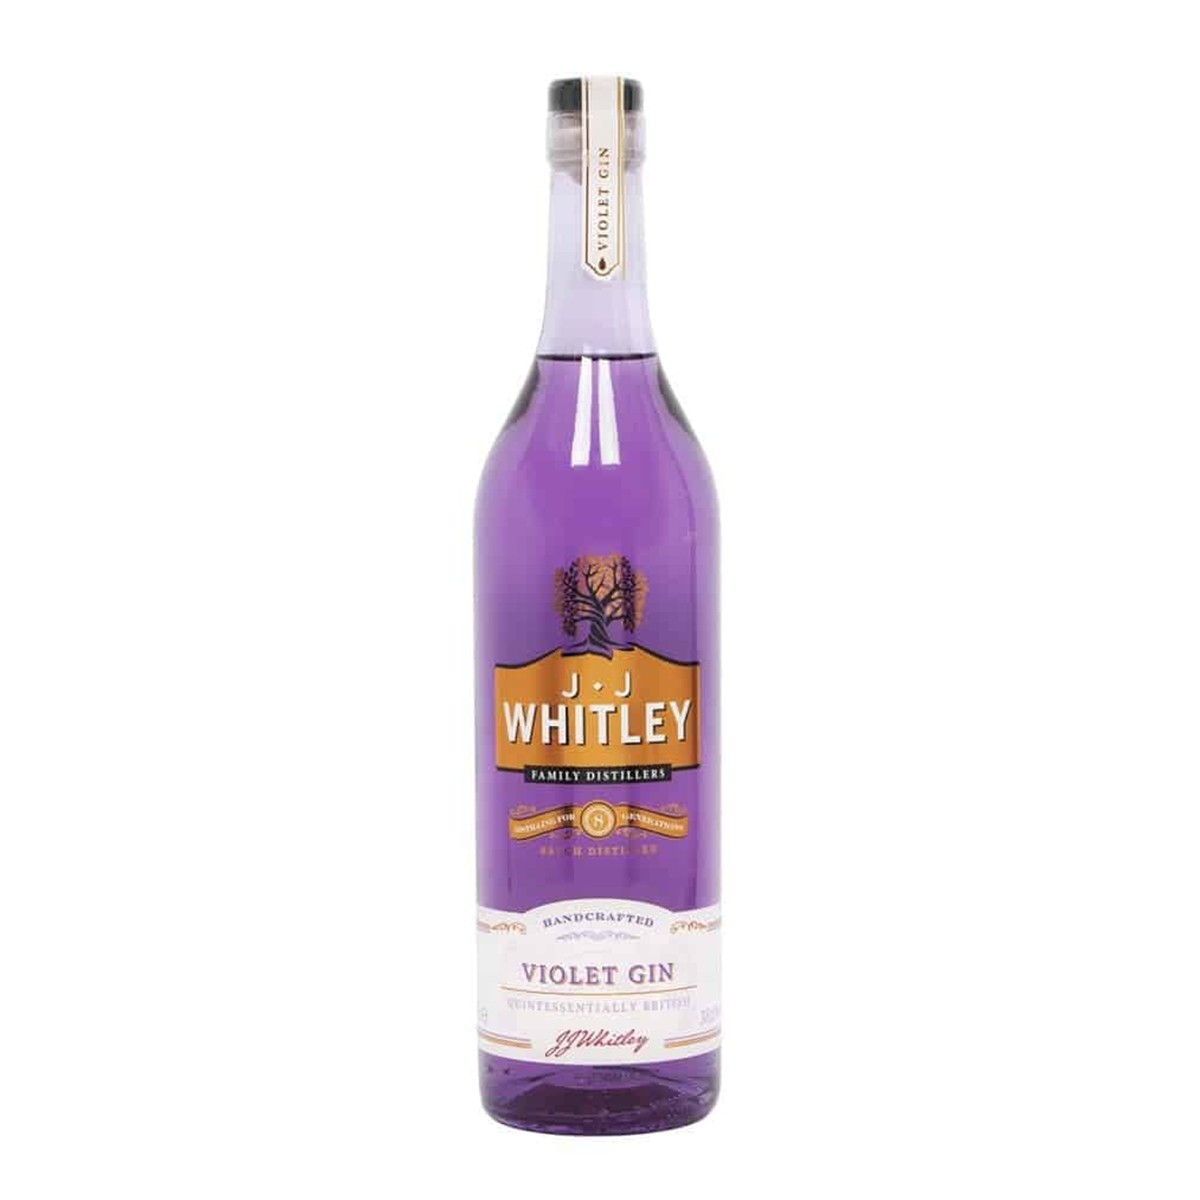 J.J. Whitley Violet  Gin 700 ml